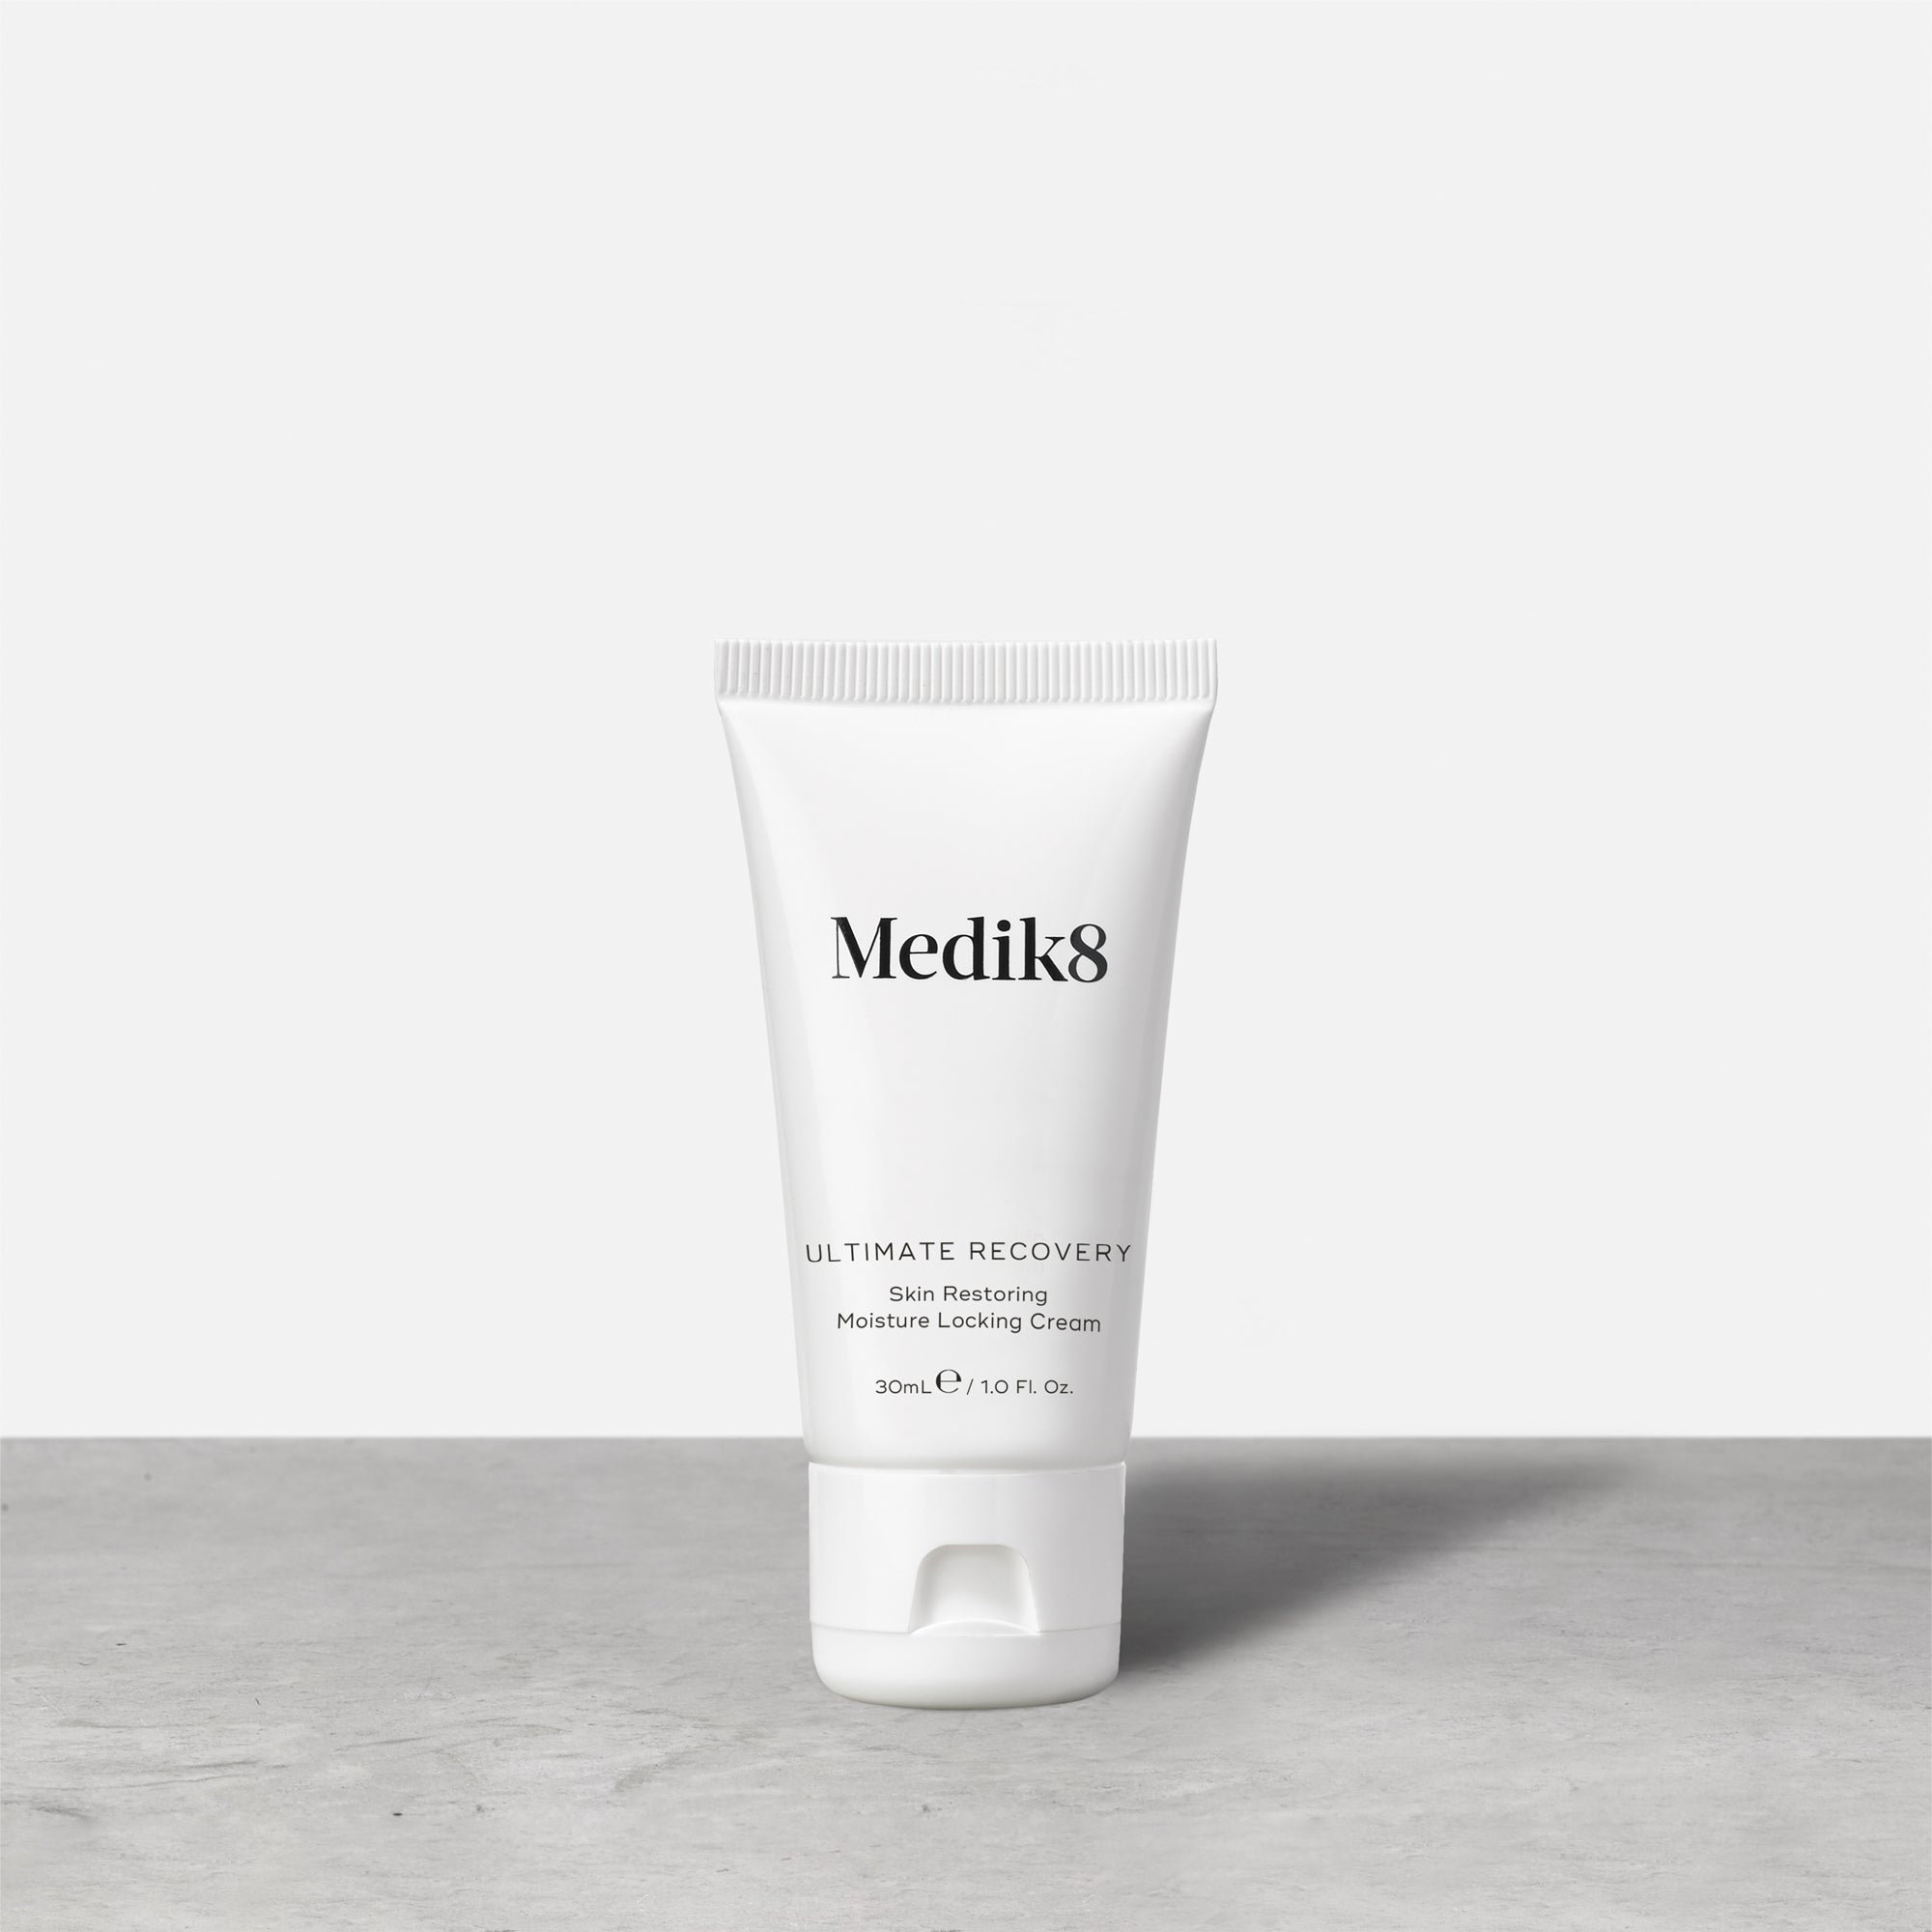 Ultimate Recovery™ by Medik8. A Skin Restoring Moisture Locking Cream.